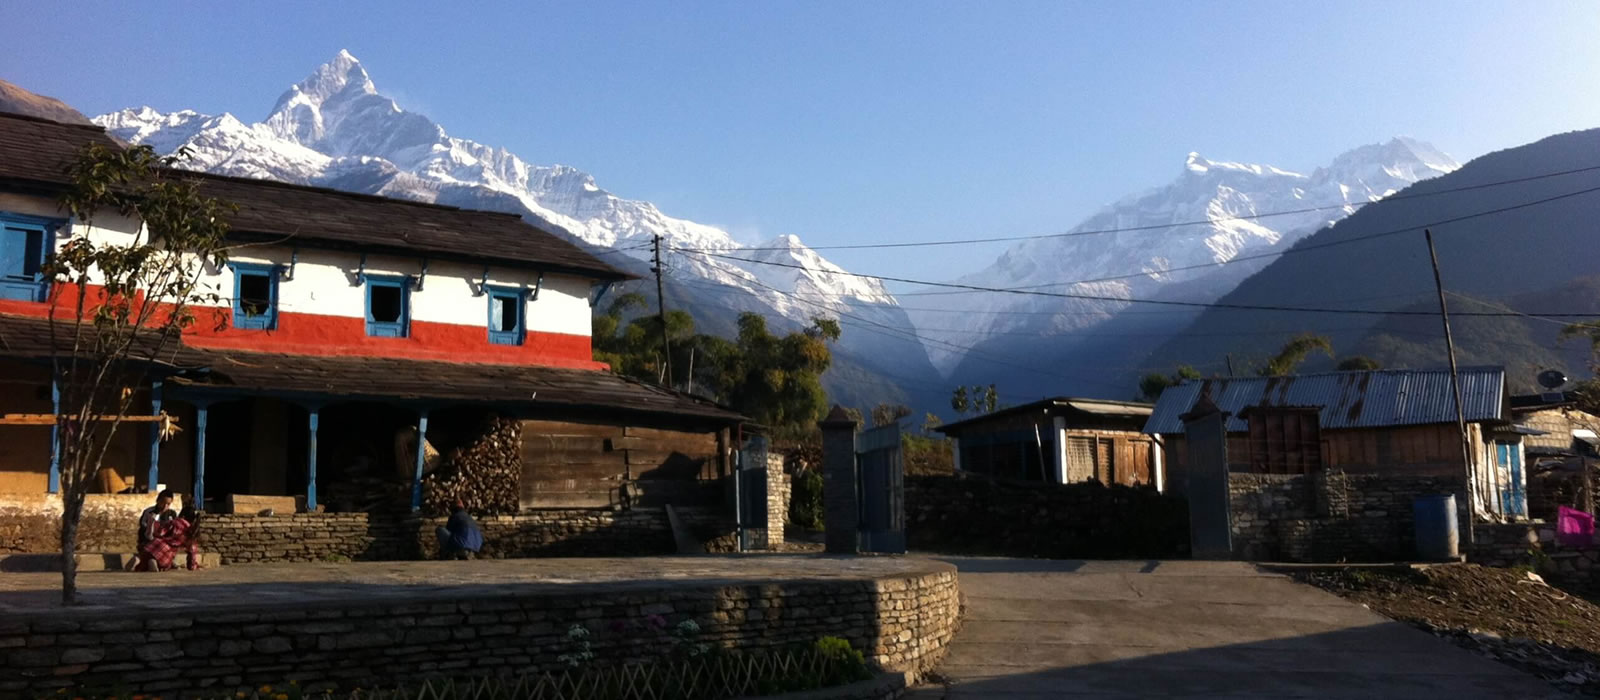  Ghale  Gaun  Trek Terrain Nepal 